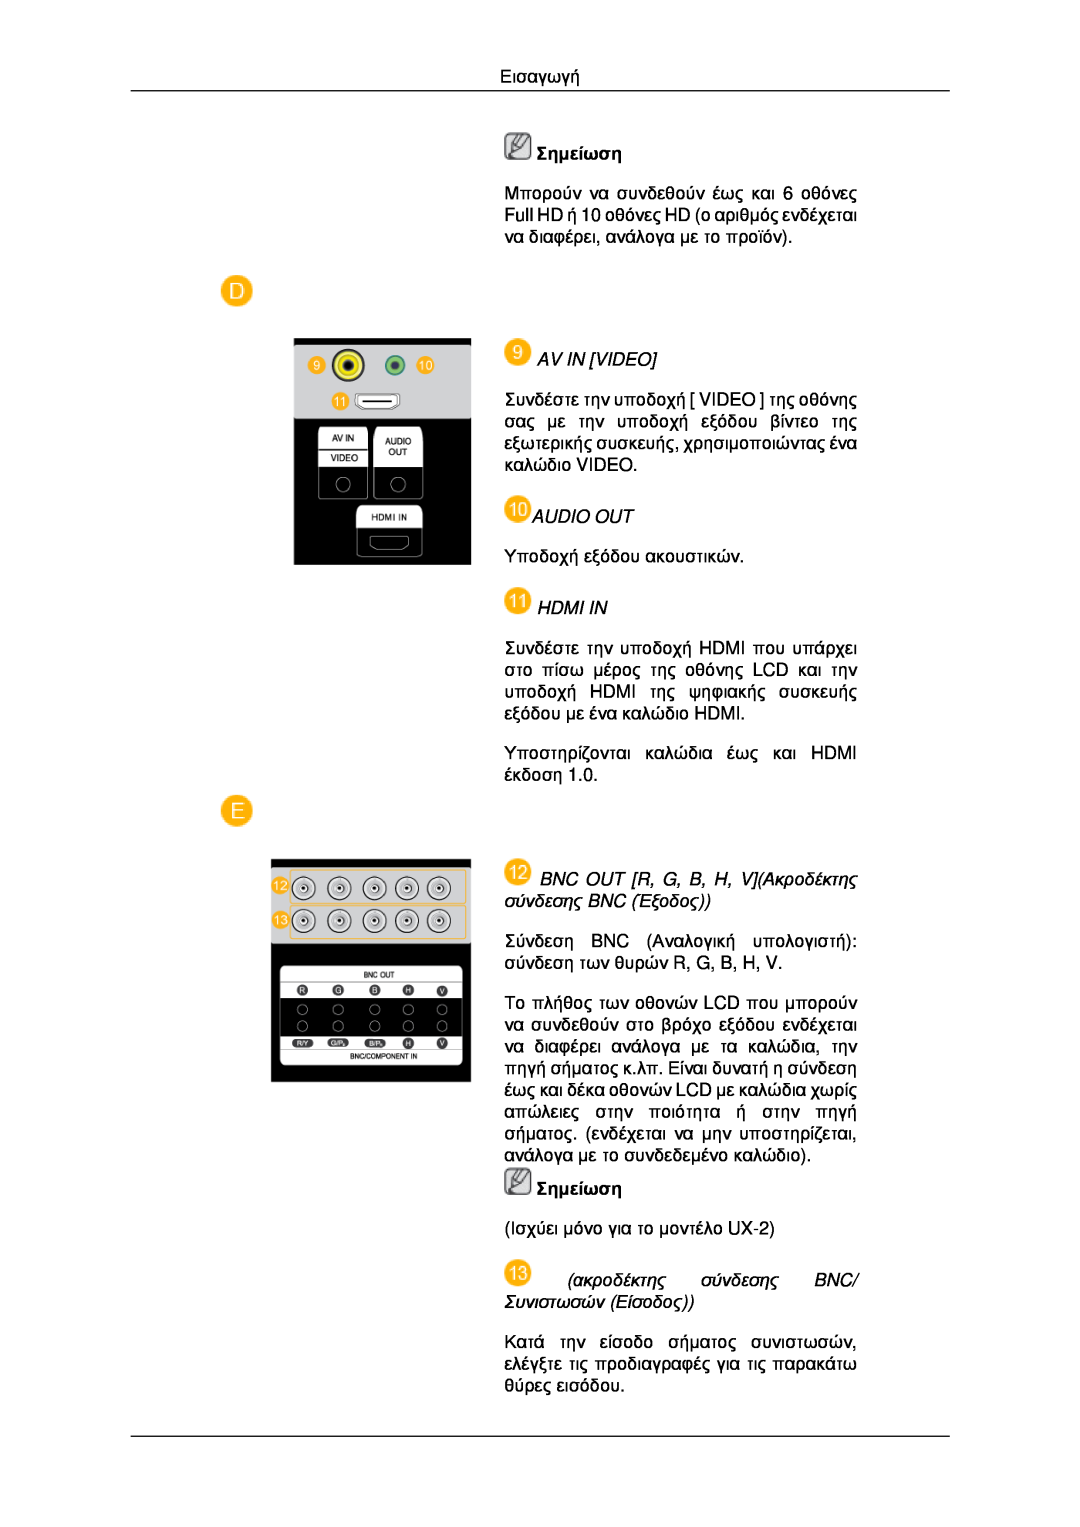 Samsung LH40MRTLBC/EN manual Av In Video, Audio Out, Hdmi In, BNC OUT R, G, B, H, VΑκροδέκτης σύνδεσης BNC Έξοδος, Σημείωση 